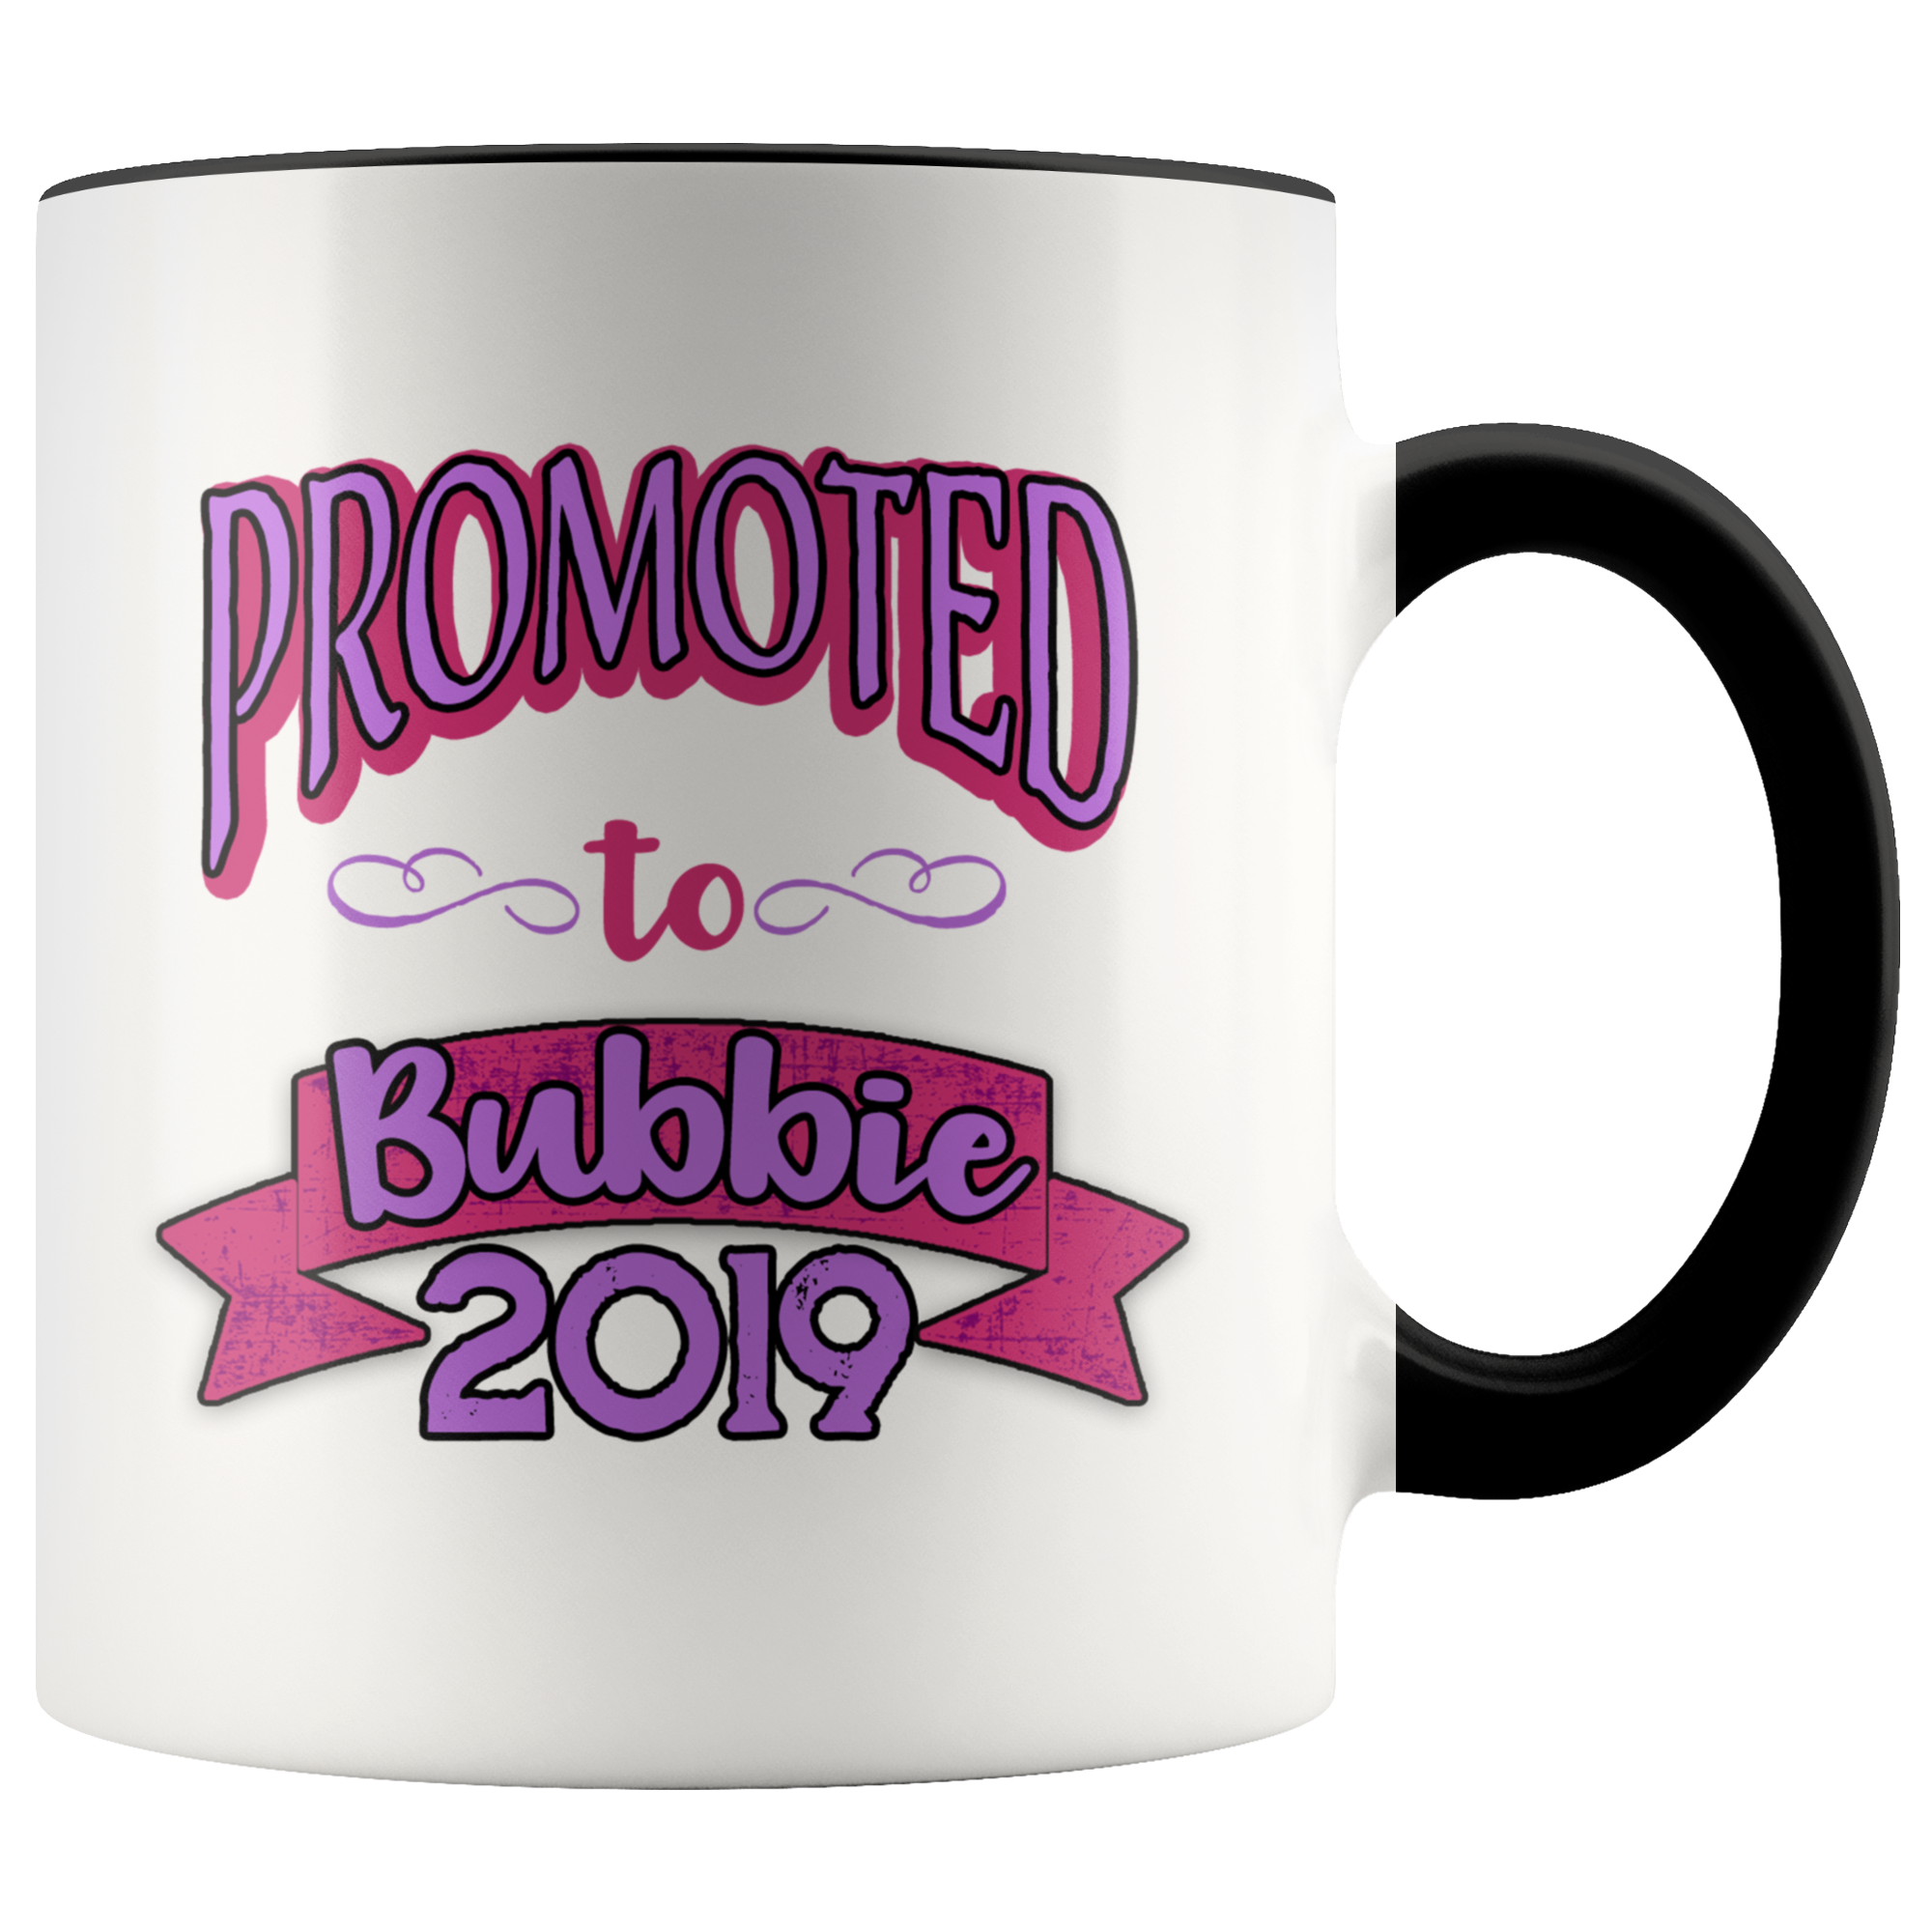 promoted to bubbie 2019 gift mug